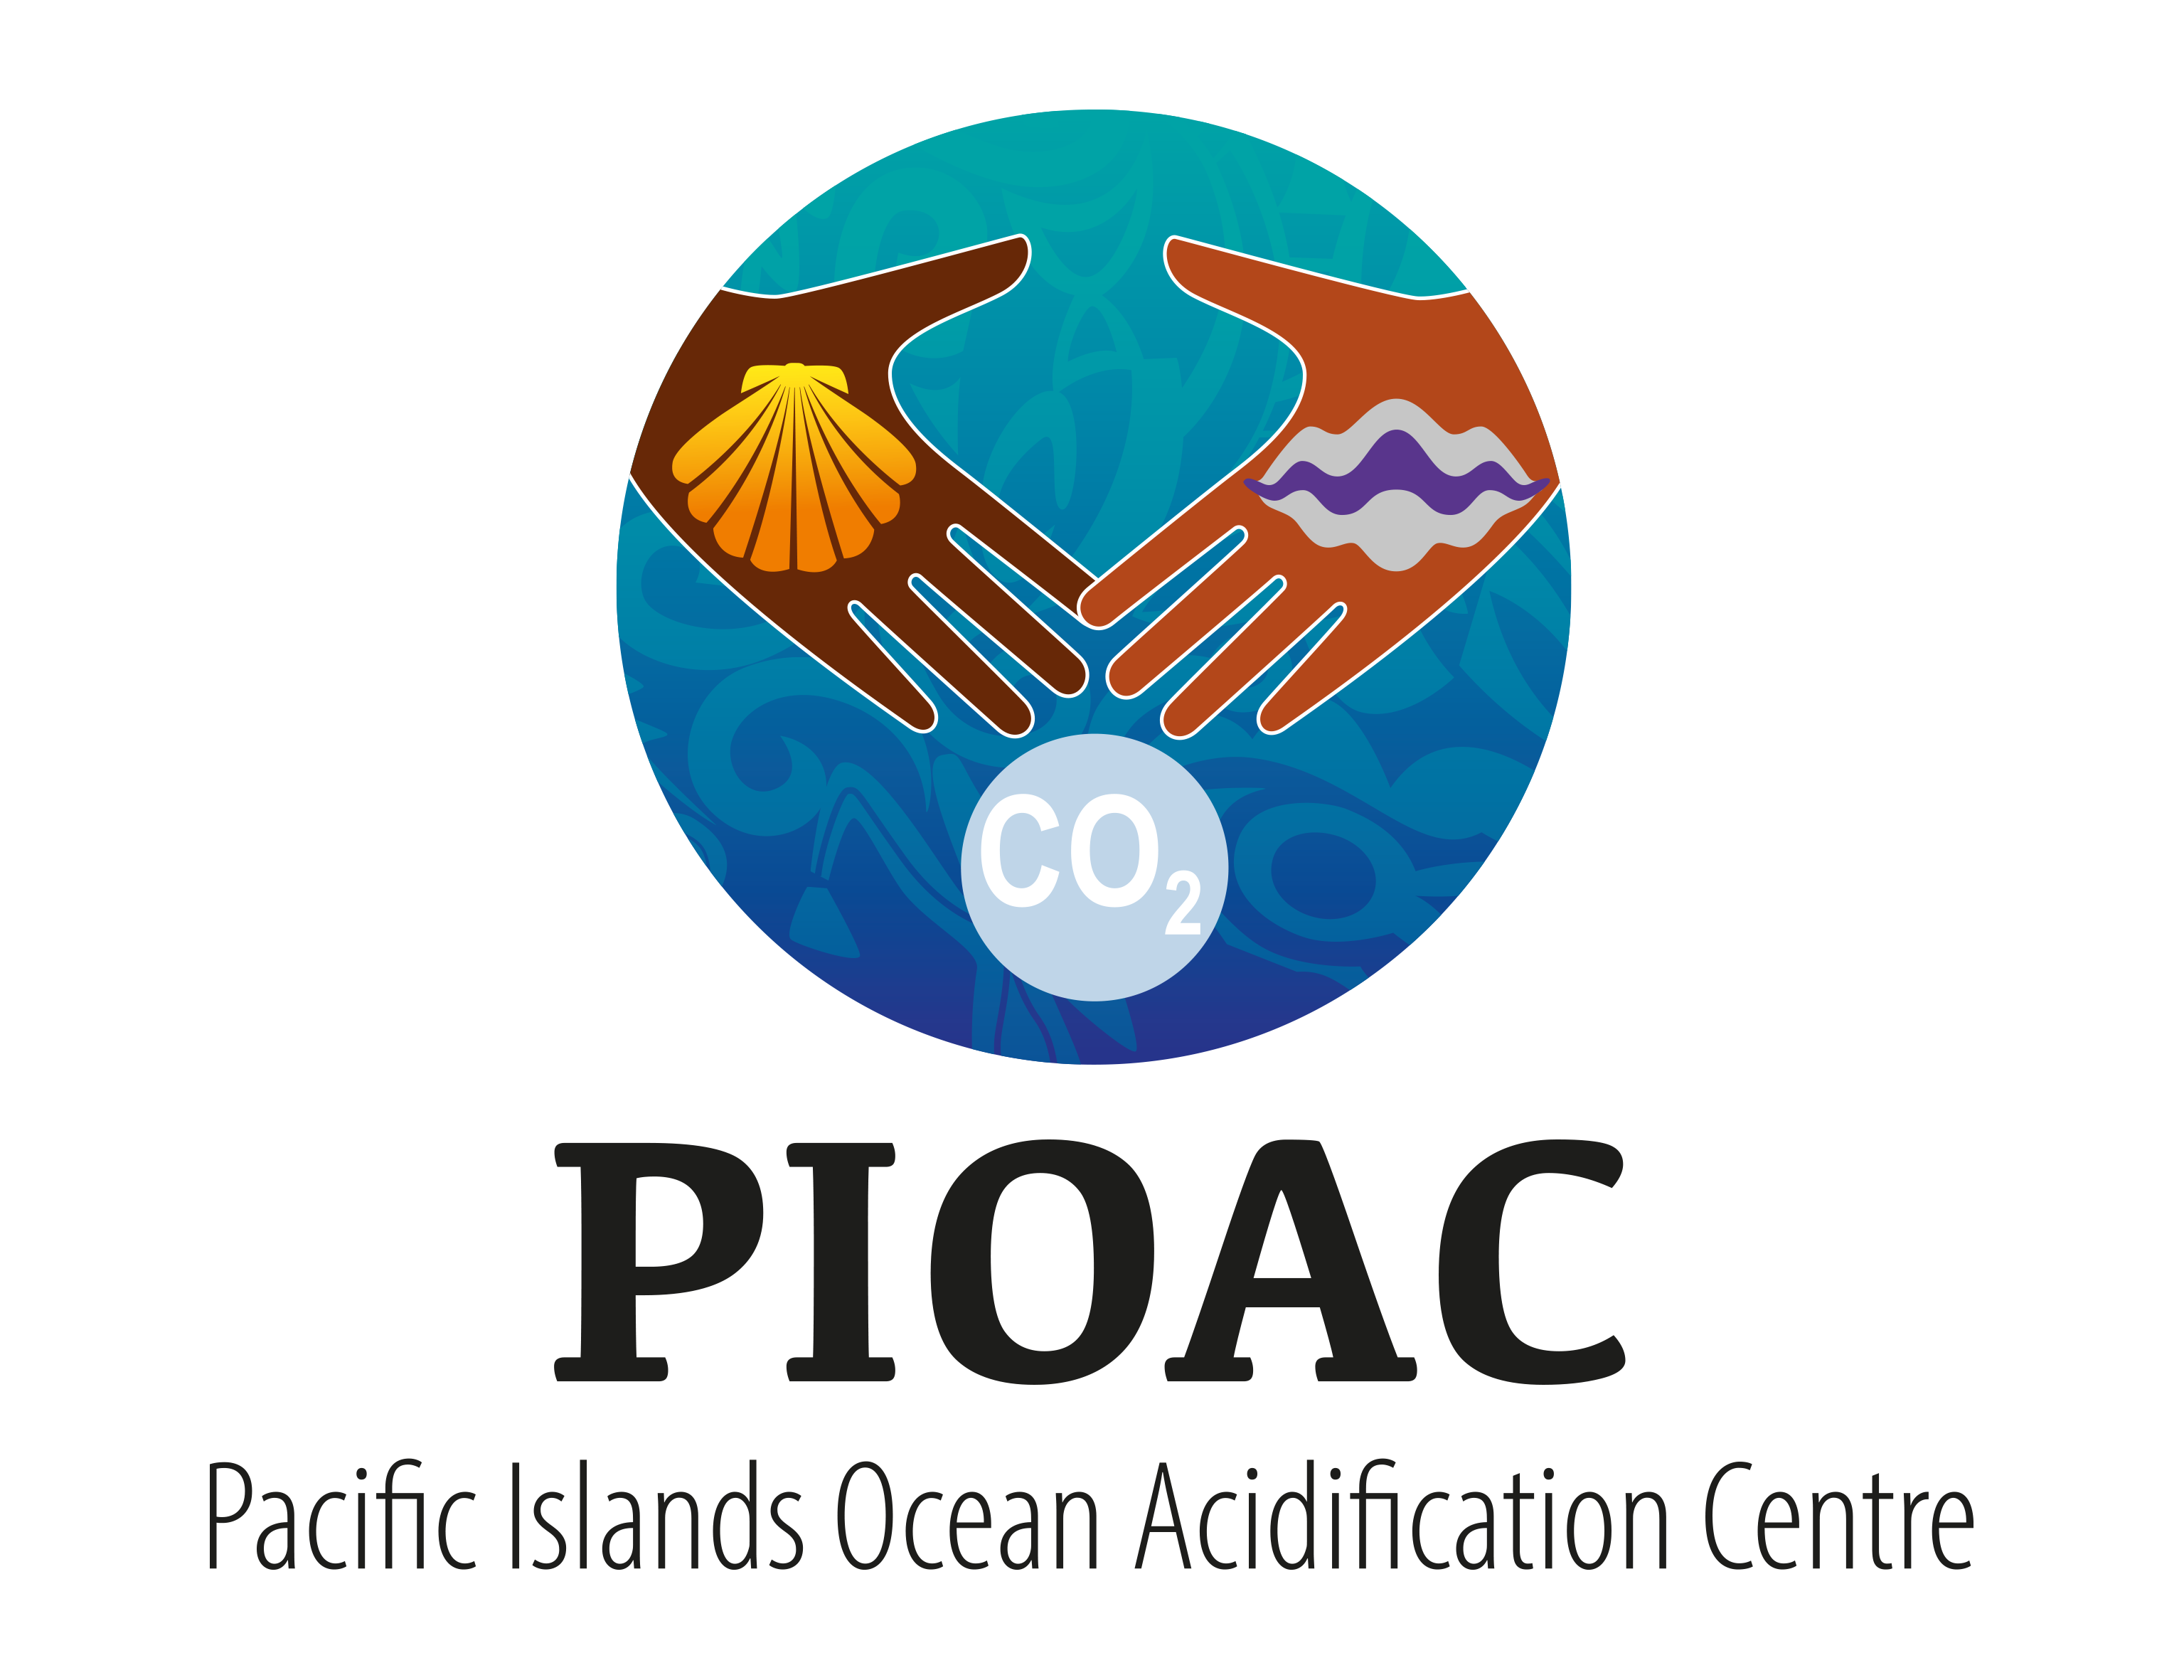 PIOAC logo